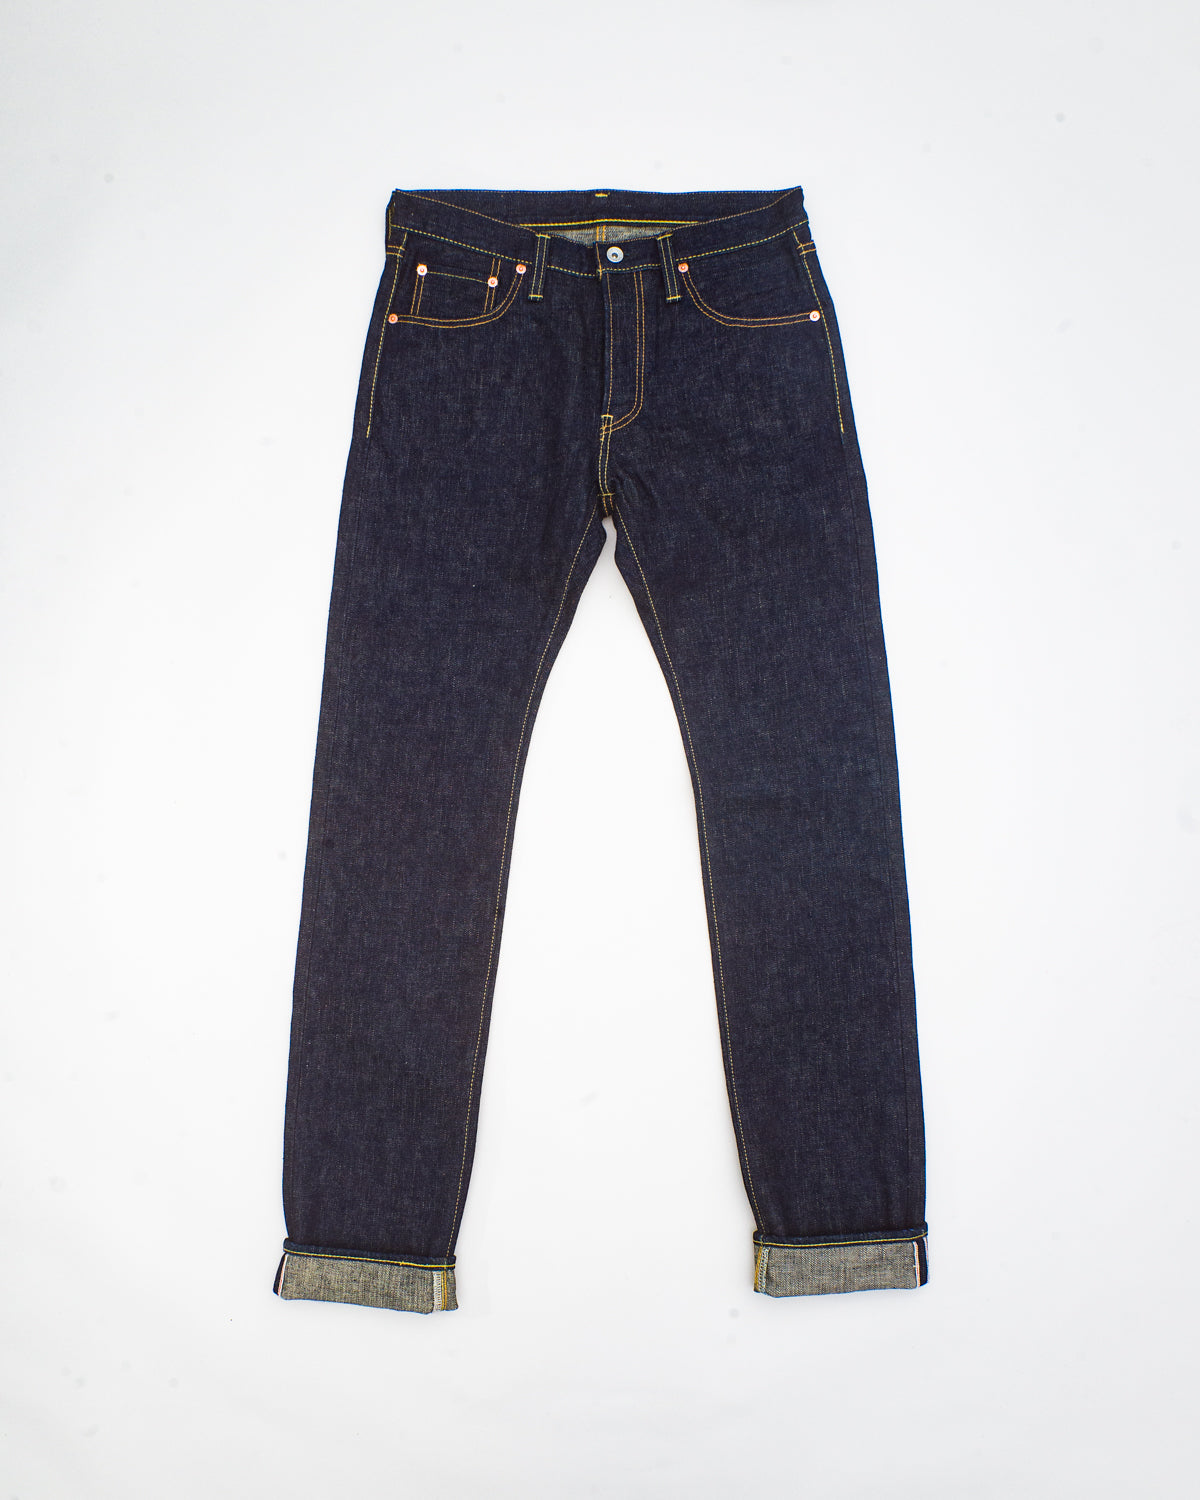 IH-777S-18 - 18oz Vintage Selvedge Denim Slim Tapered Cut Jeans - Indigo